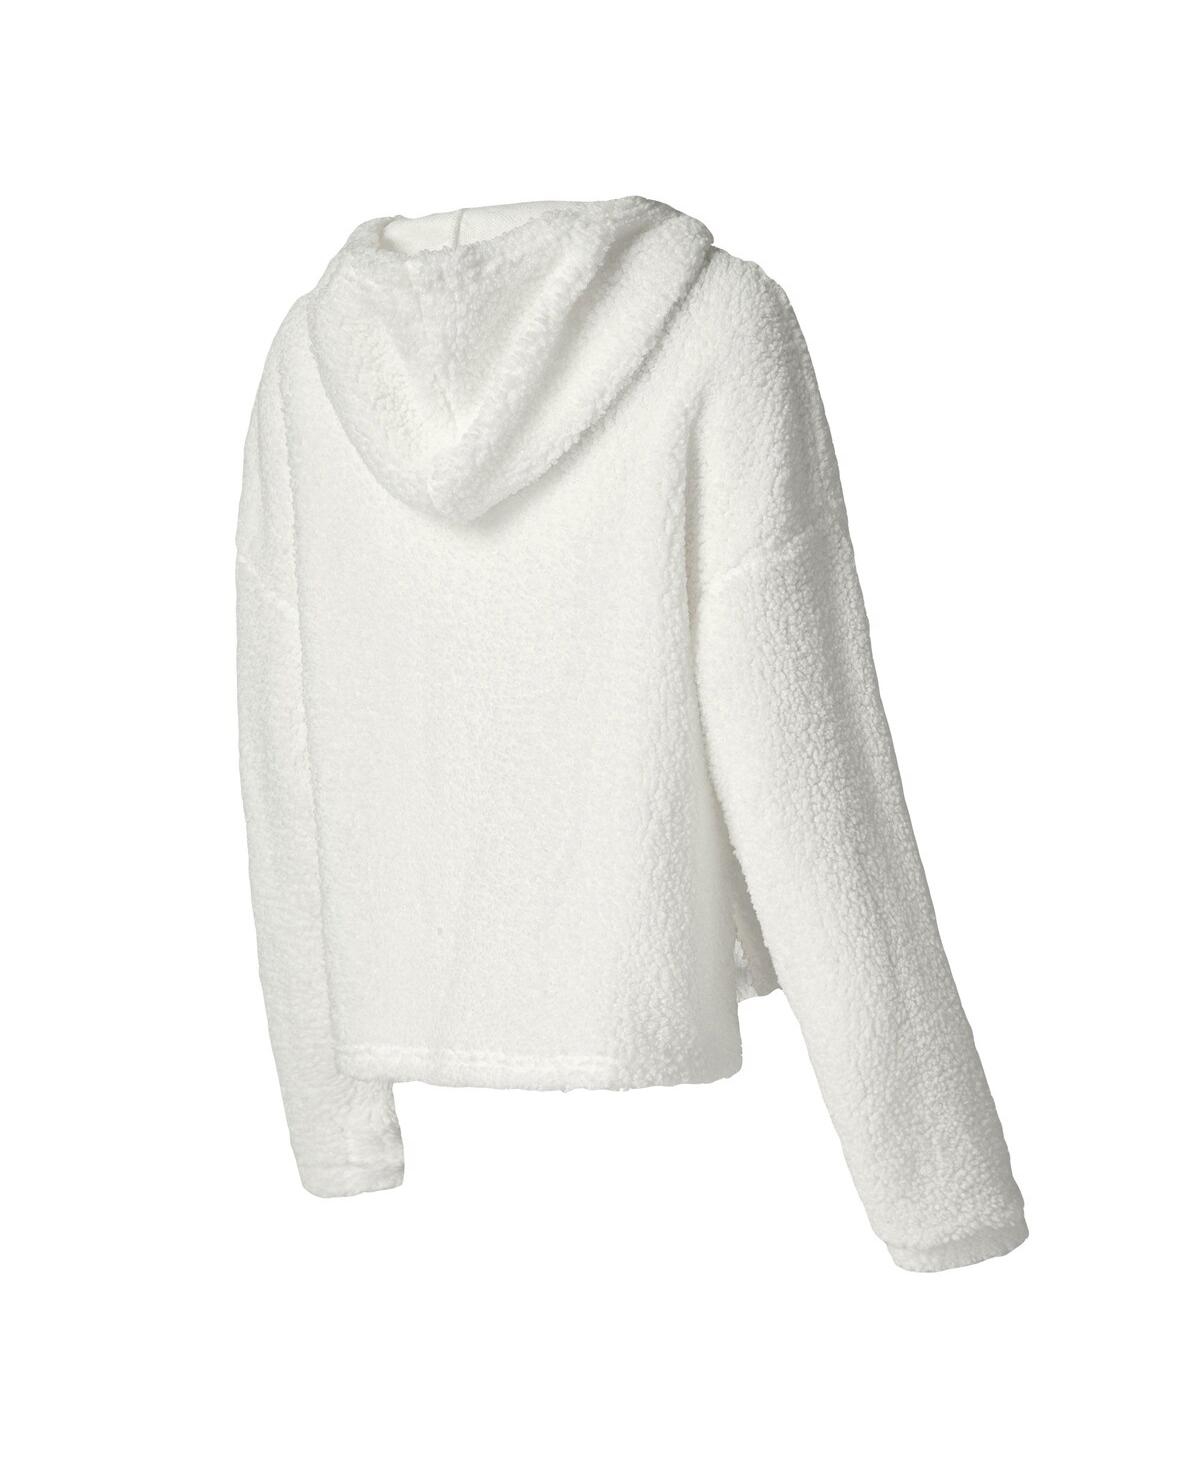 Shop Concepts Sport Women's  White Philadelphia Eagles Fluffy Pullover Sweatshirt And Shorts Sleep Set